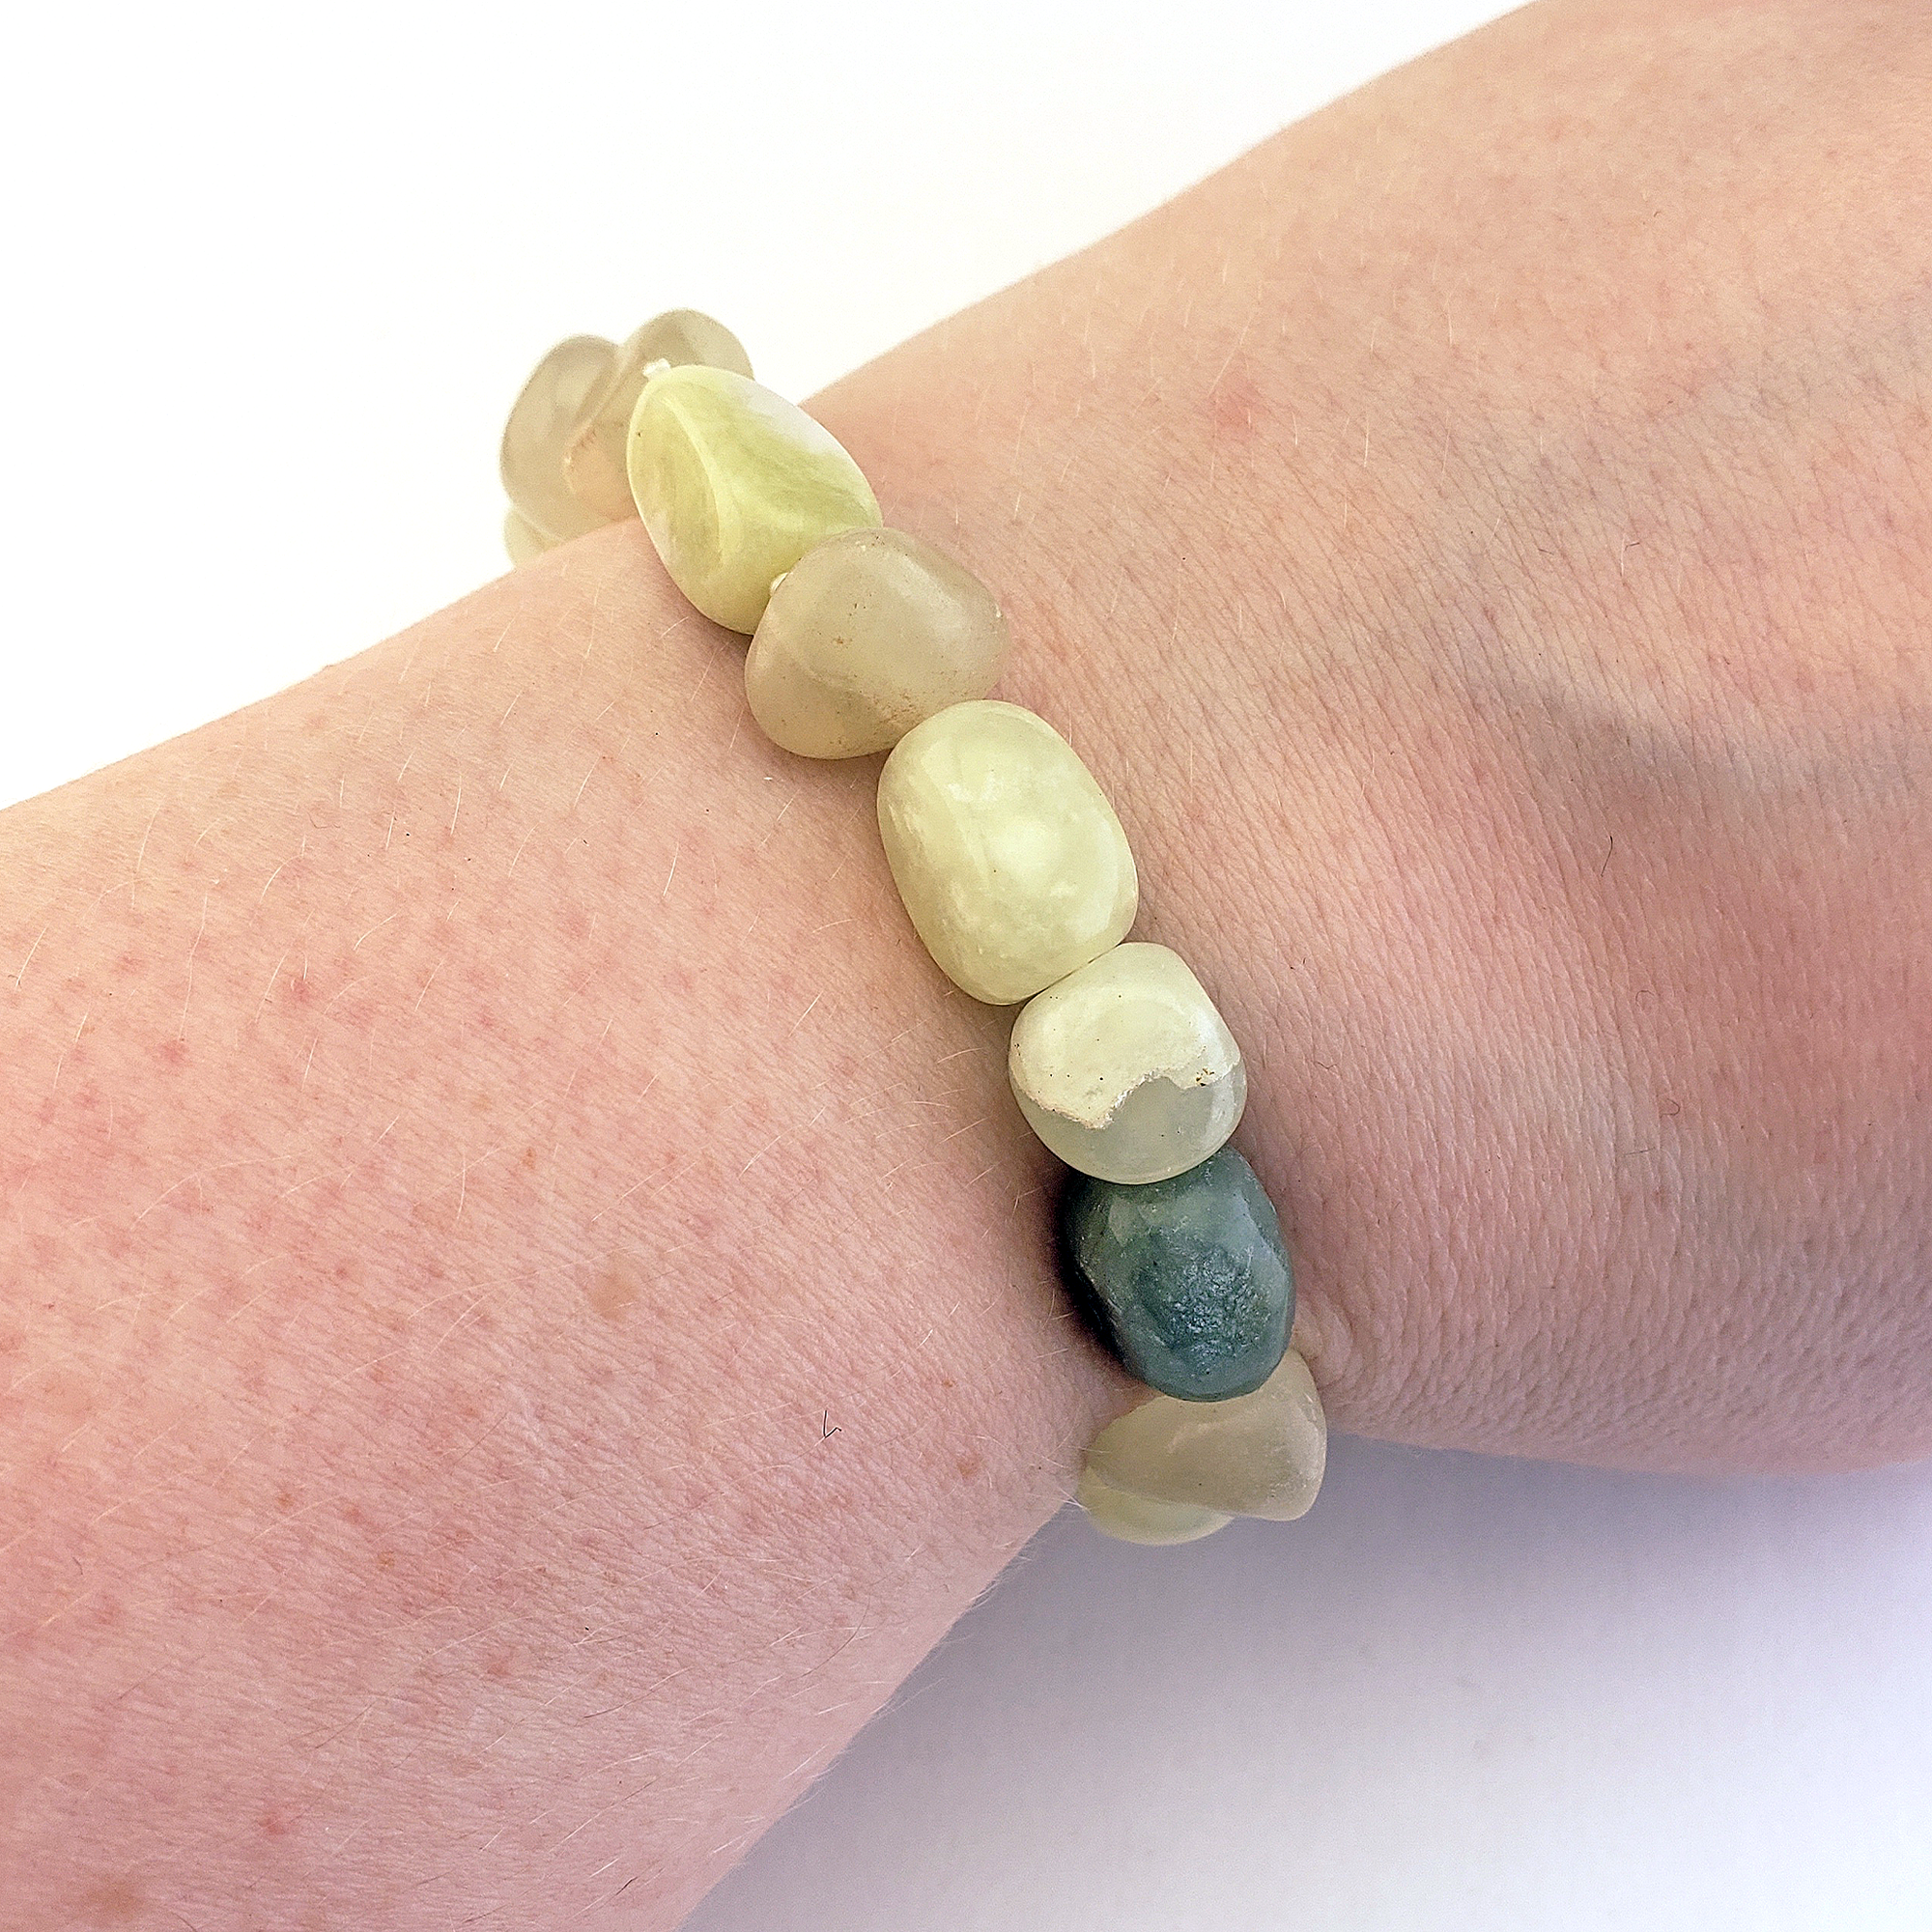 New Jade Serpentine Gemstone Nugget Polished Bracelet - On Wrist